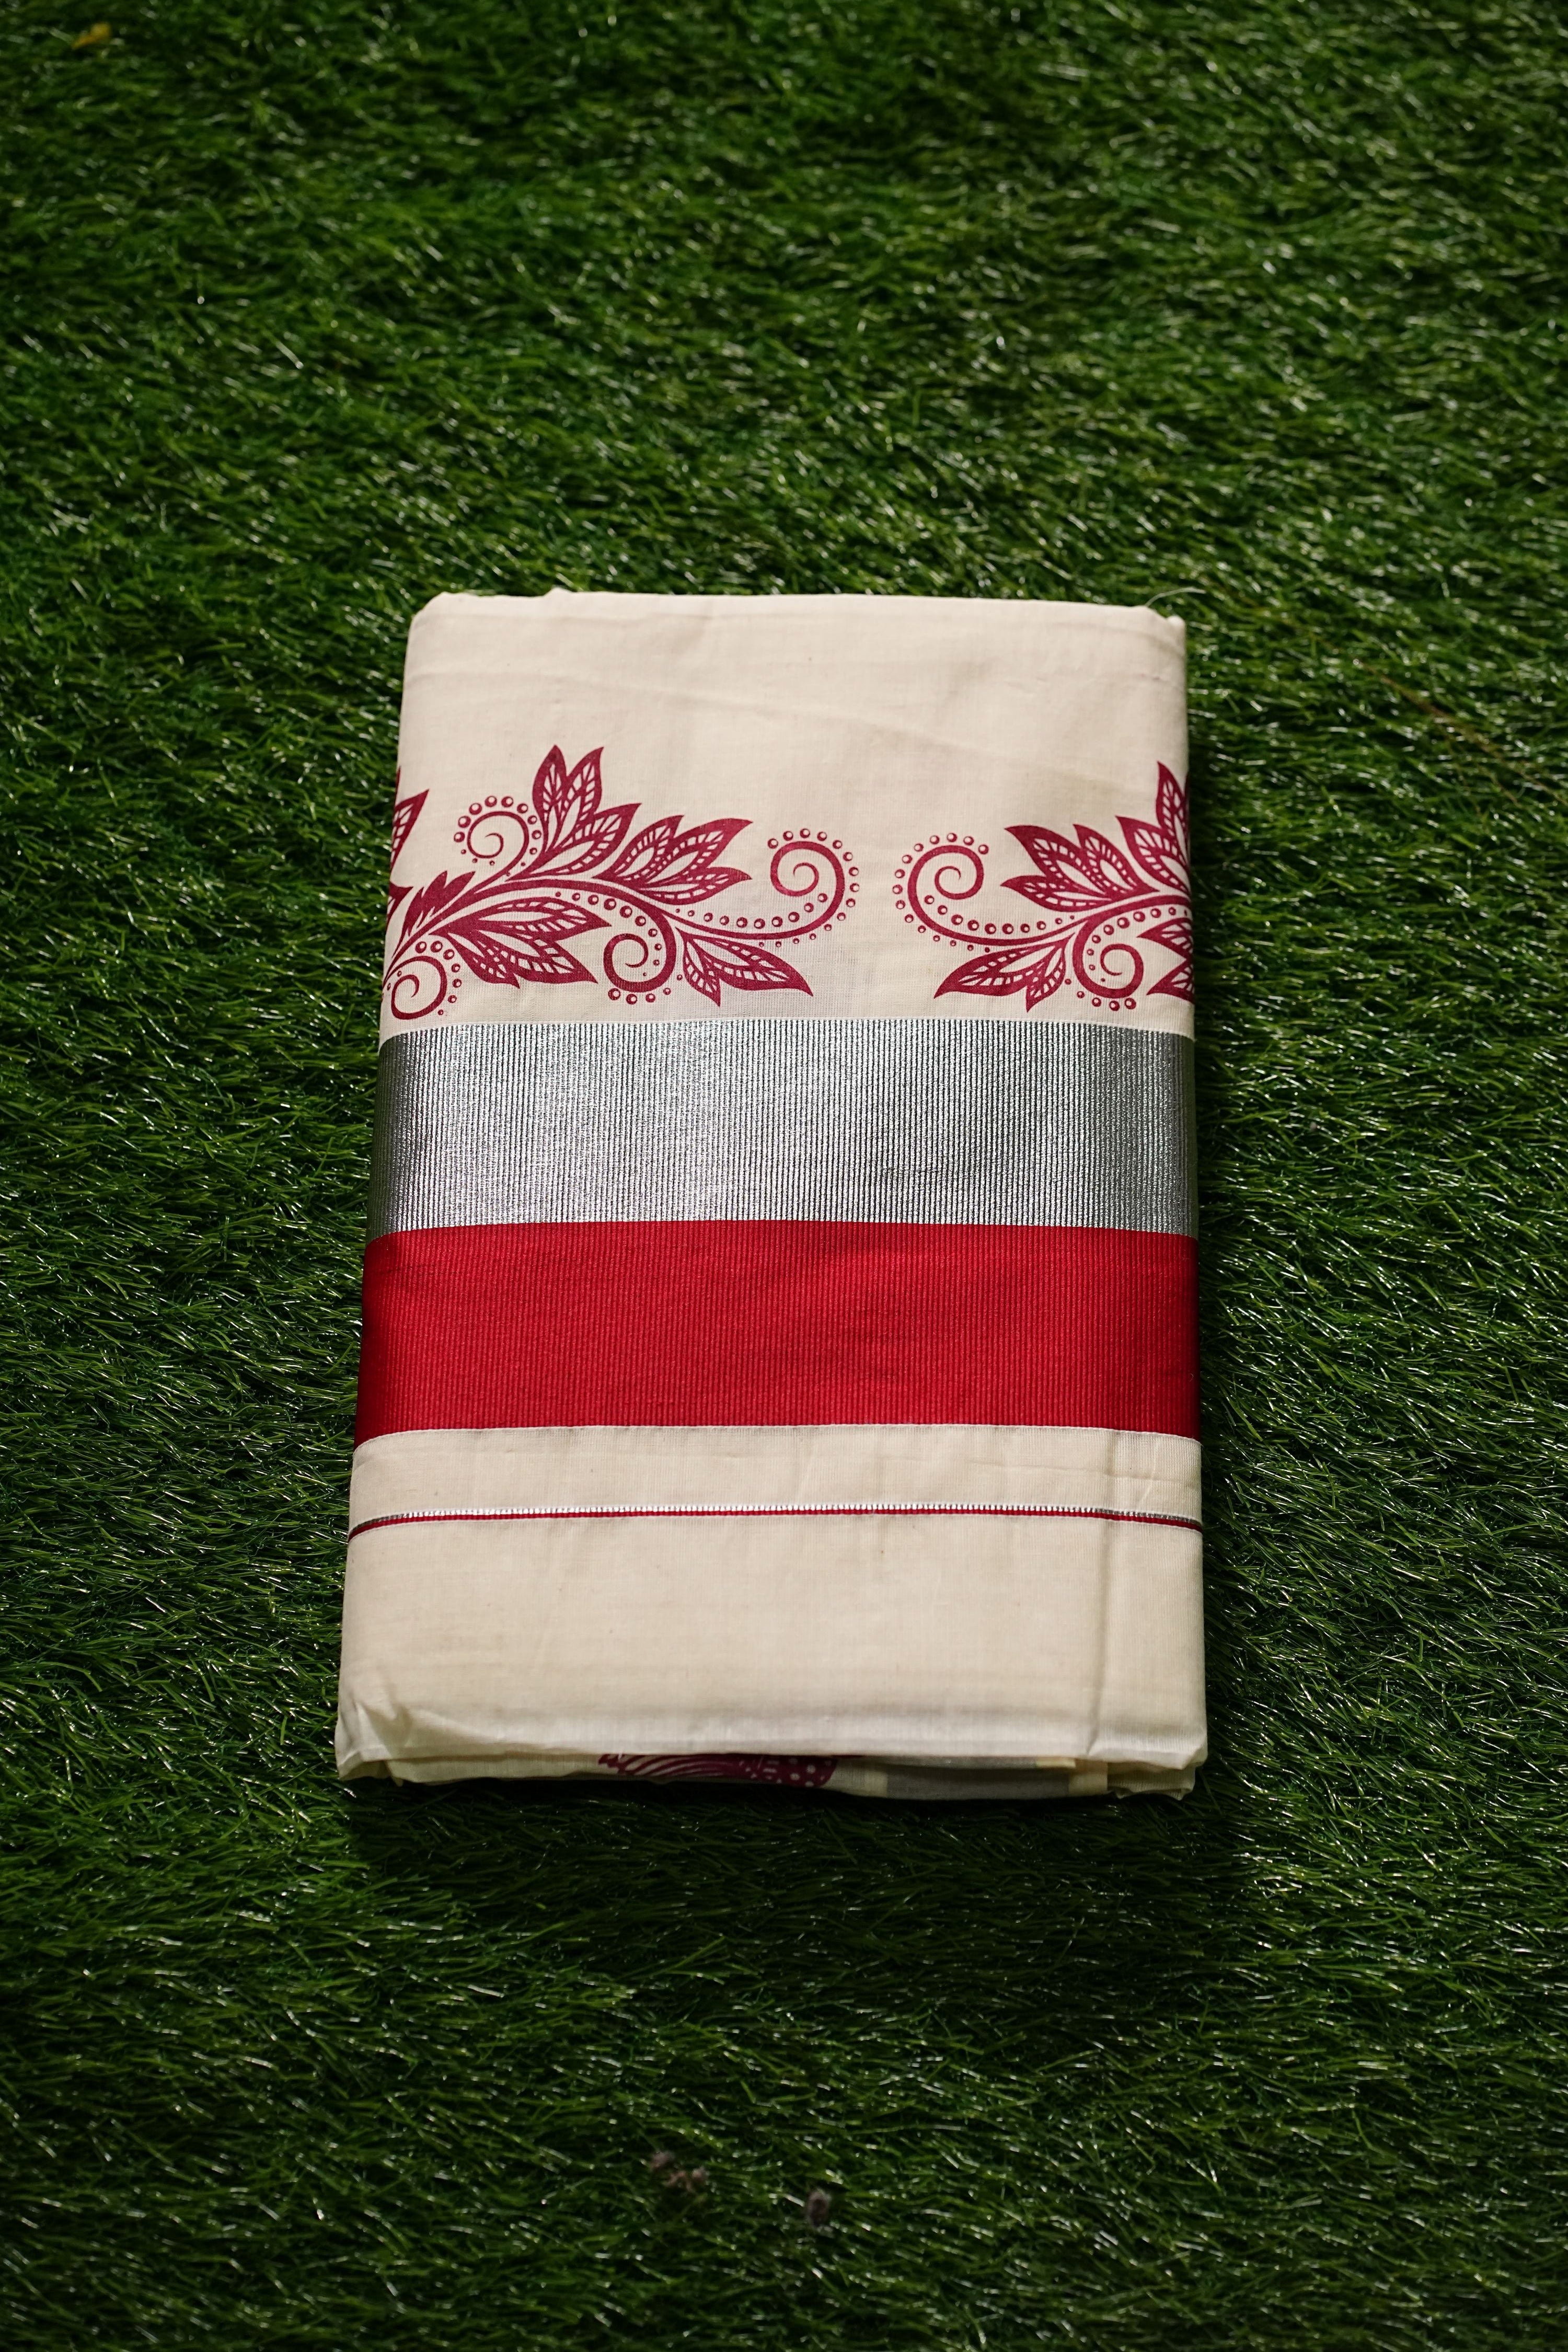 Cotton Set saree with Silver kara and coloured floral design-2455